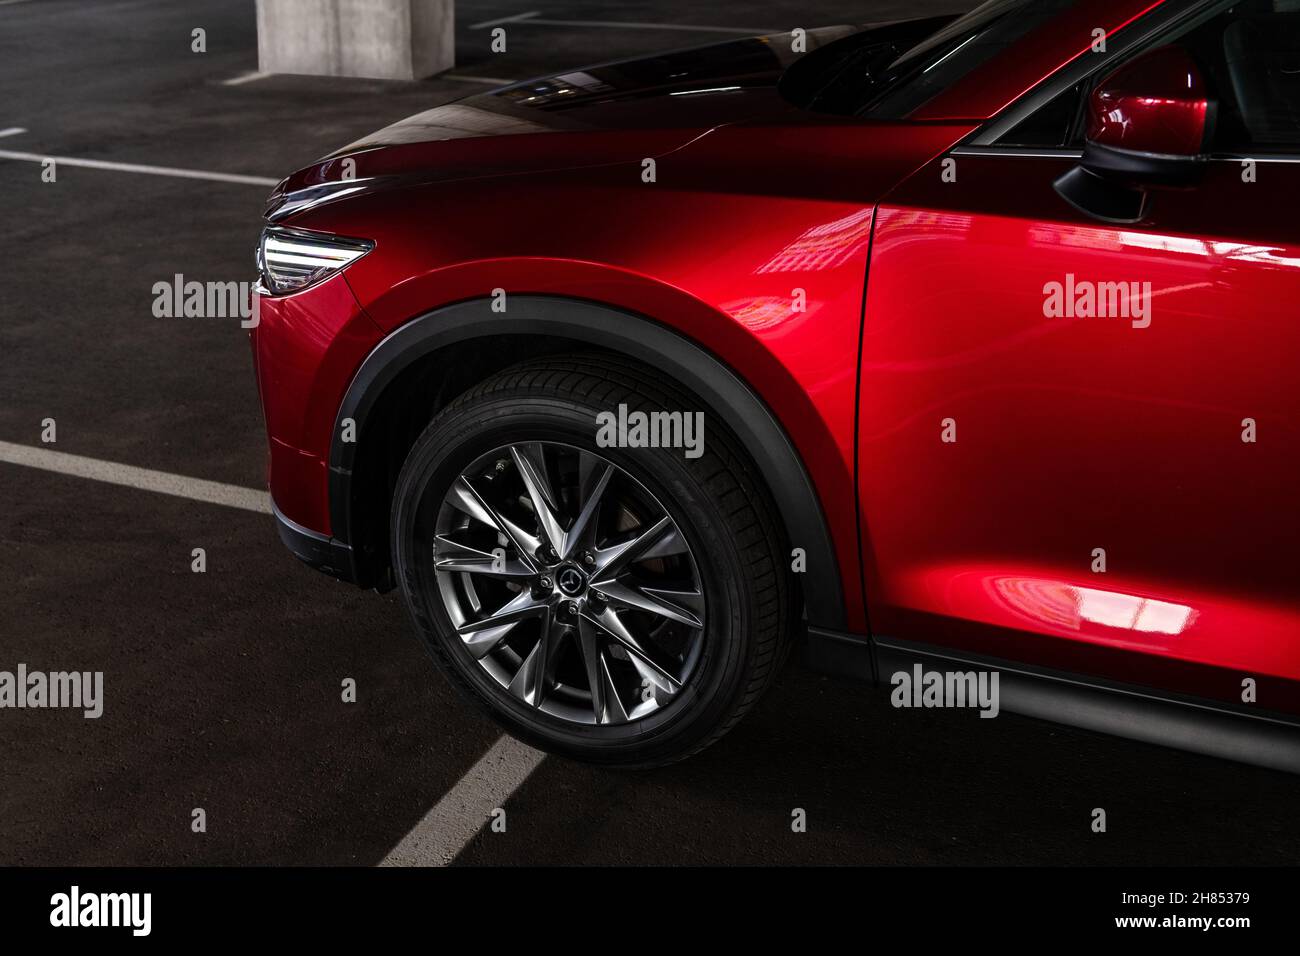 Kyiv, Ukraine - July 3, 2021: New red Mazda CX-5 closeup side view Stock Photo